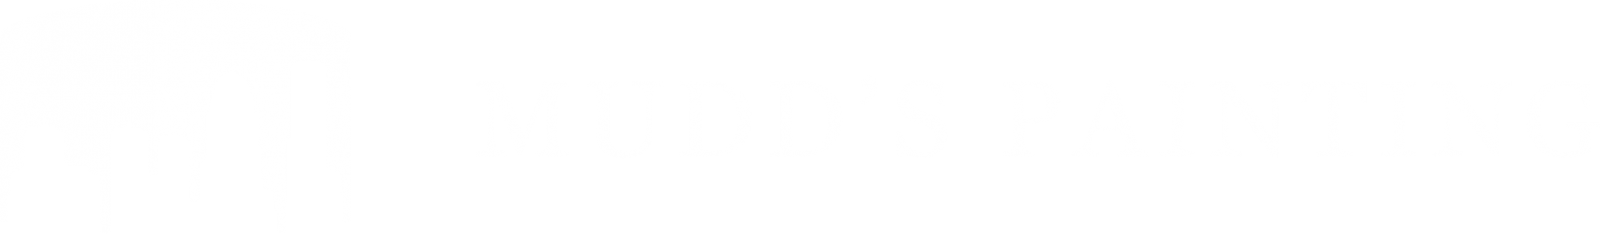 Mudd's Painting Logo